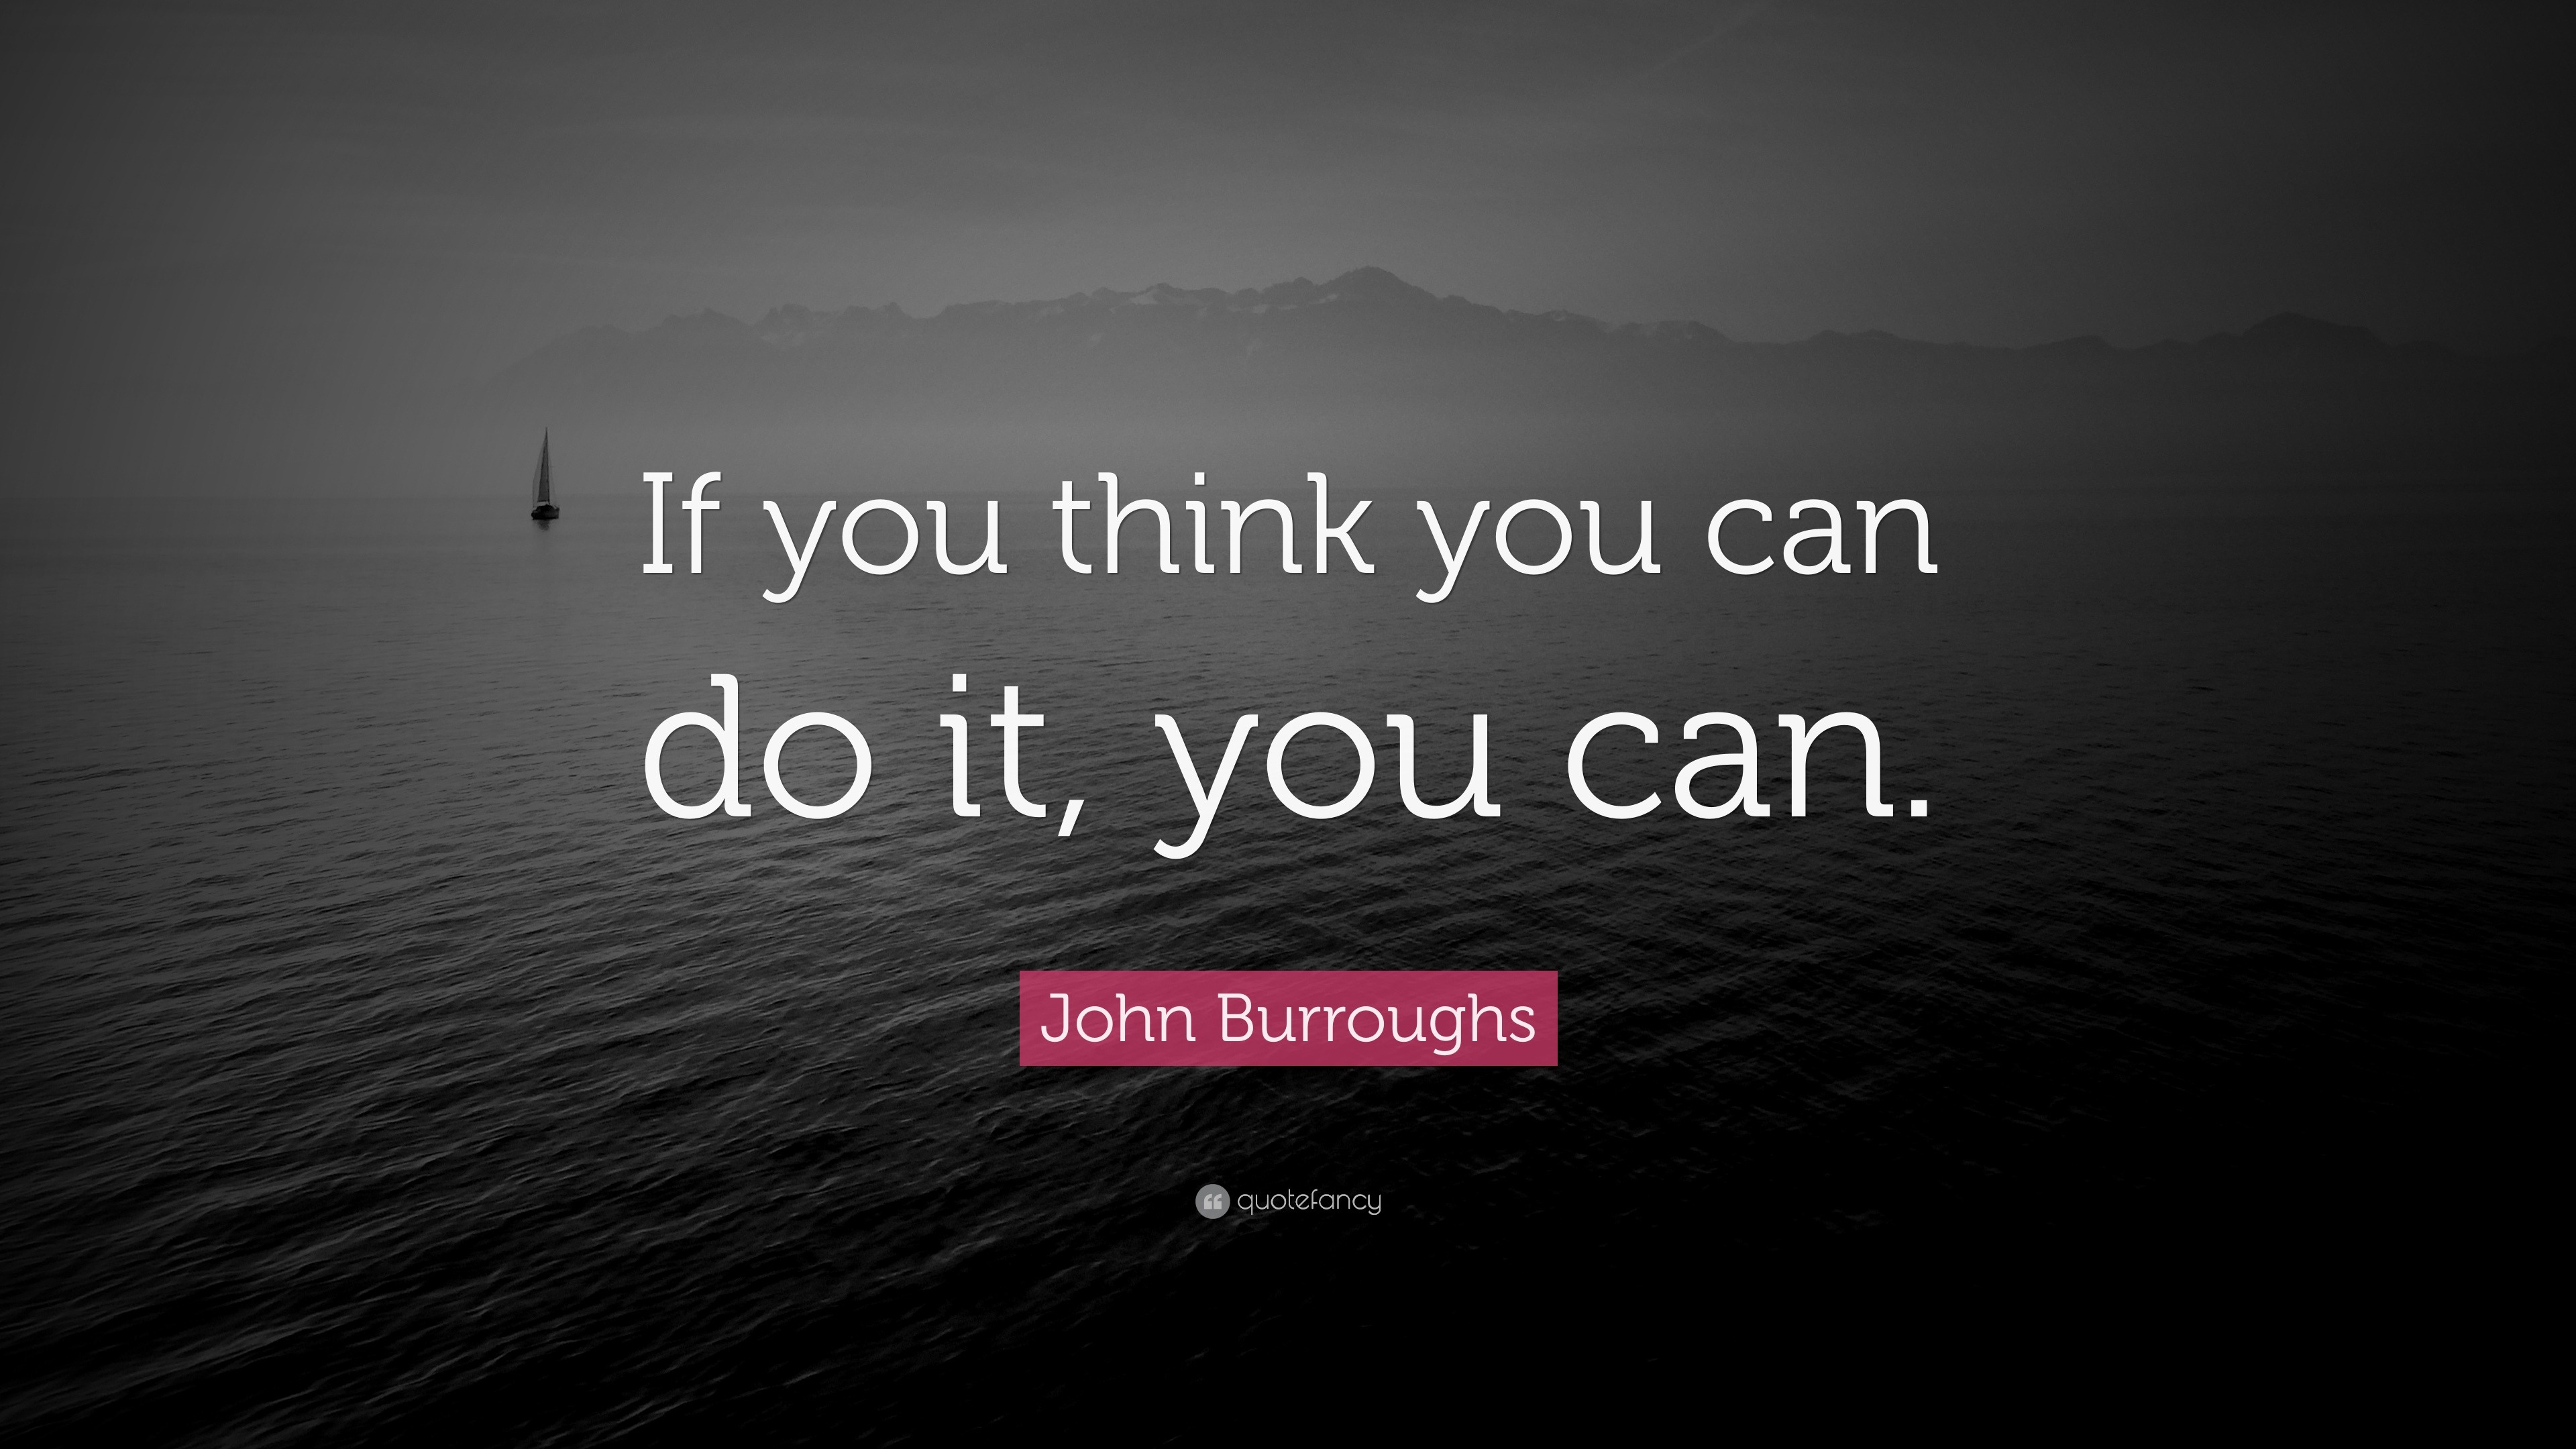 John Burroughs - If you think you can do it, you can.